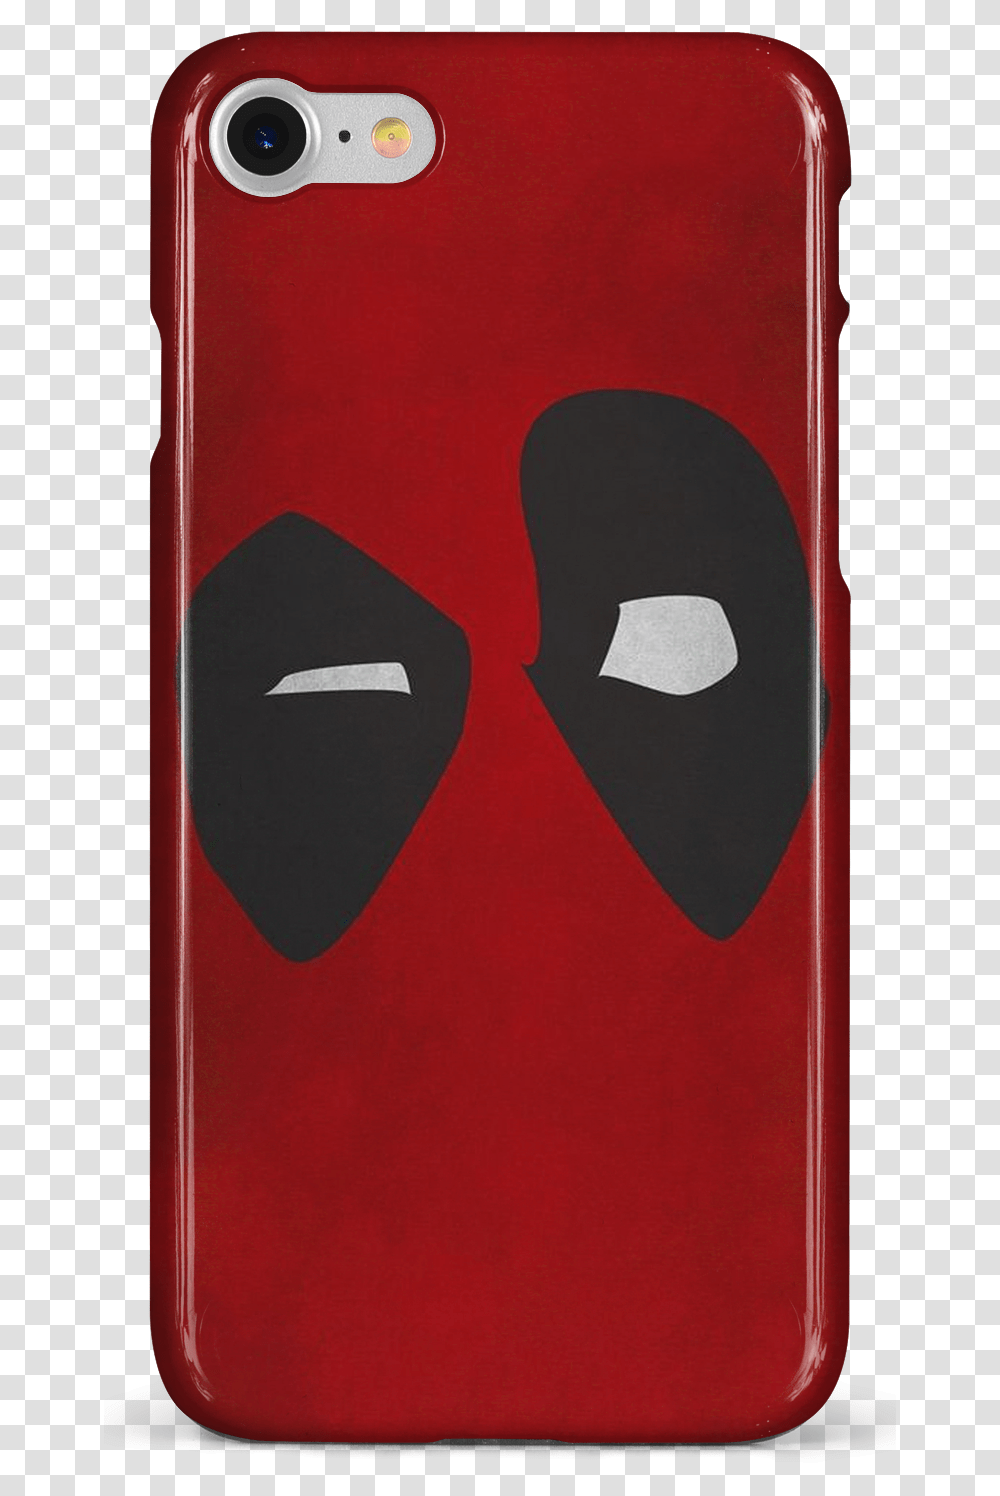 Deadpool Download Deadpool, Mobile Phone, Electronics, Cell Phone Transparent Png